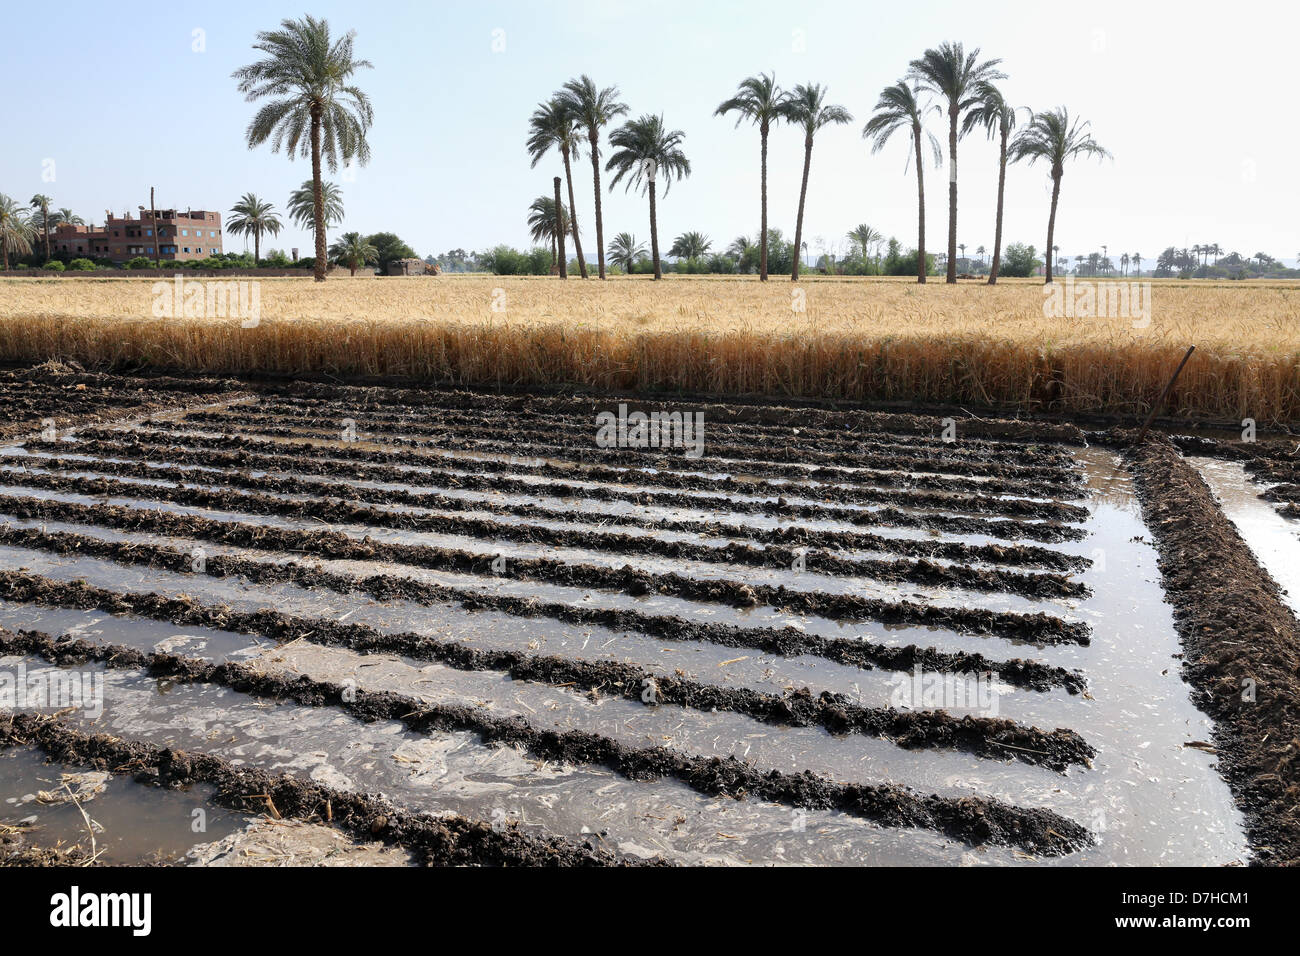 Canal de riego de cultivos de campo de trigo en el Alto Egipto Foto de stock